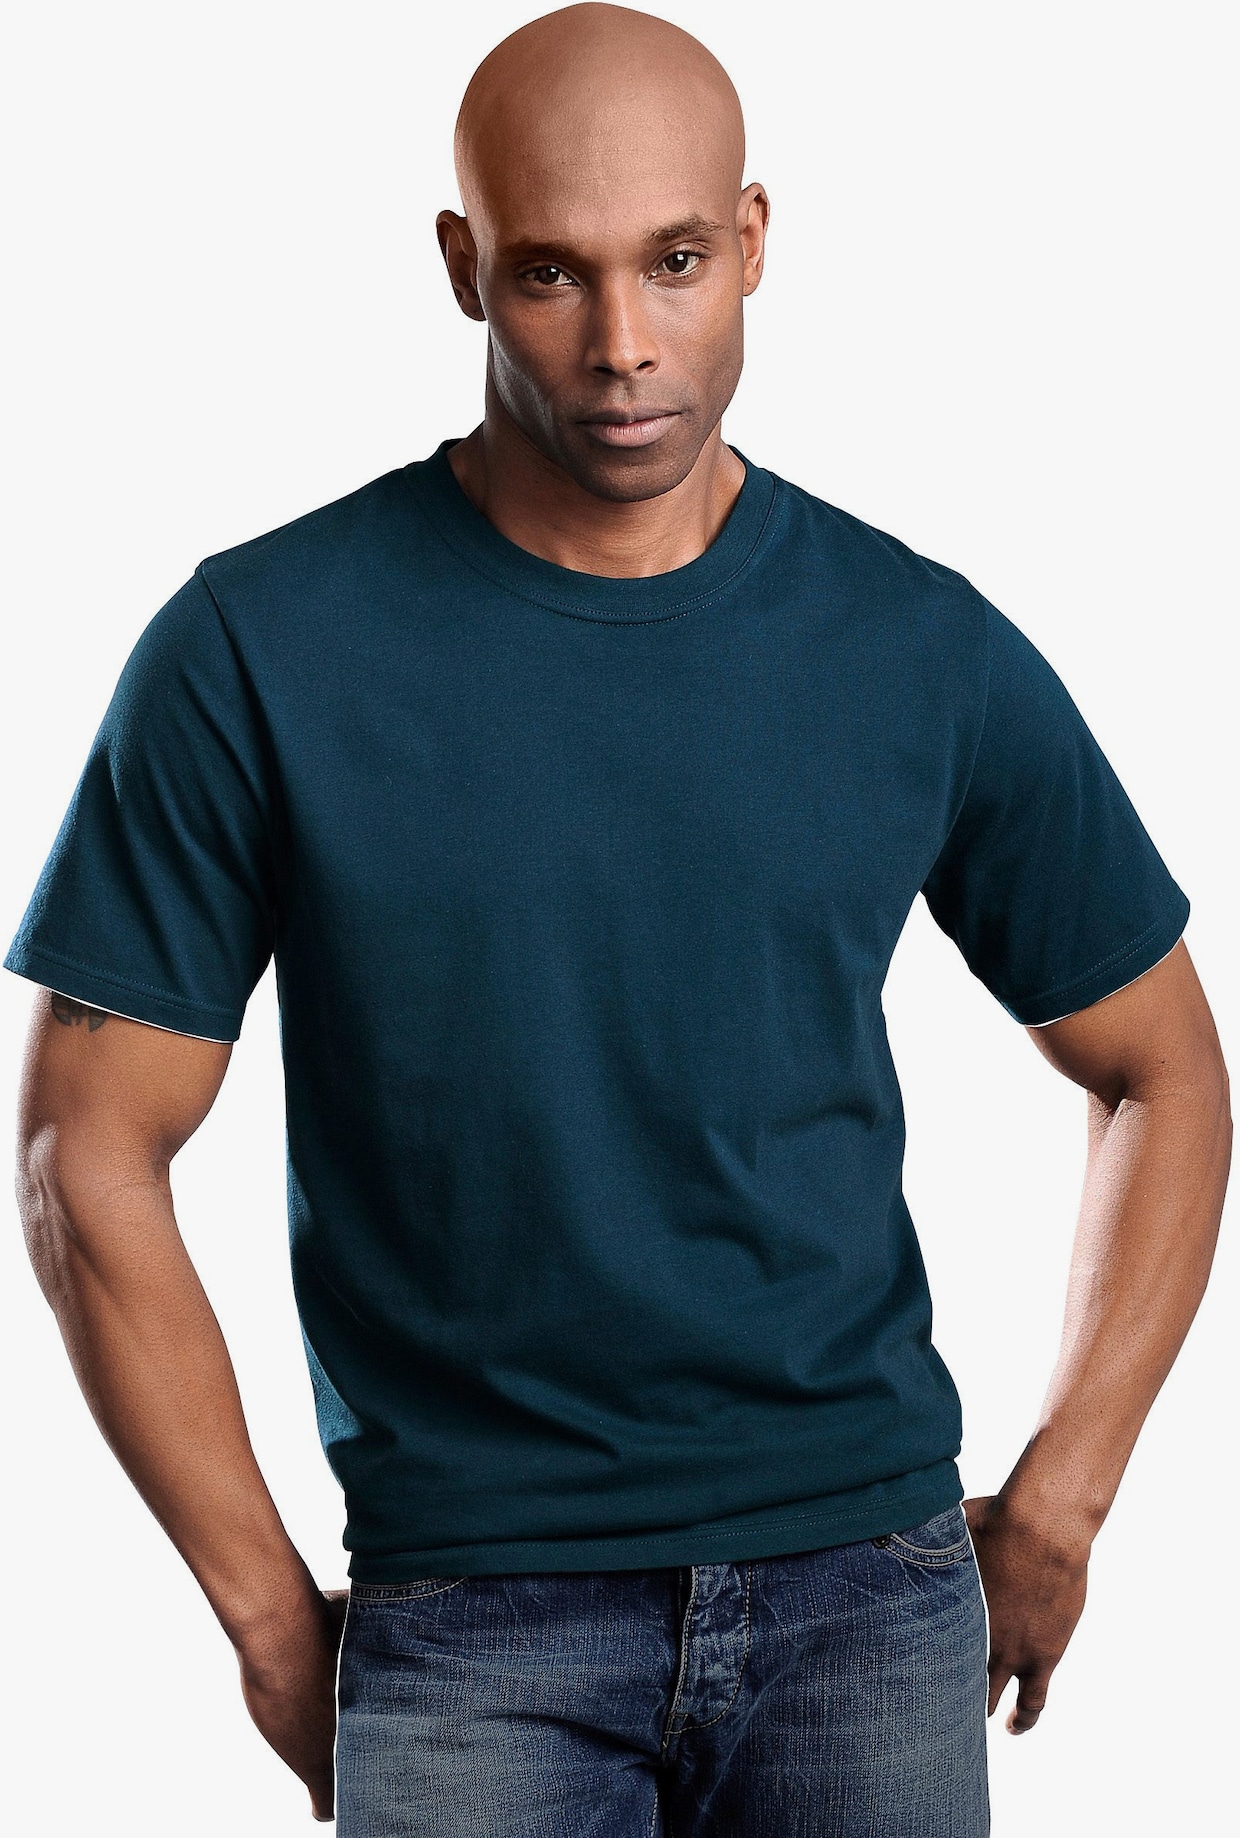 H.I.S T-Shirt - dunkelpetrol, dunkelgrau, petrol